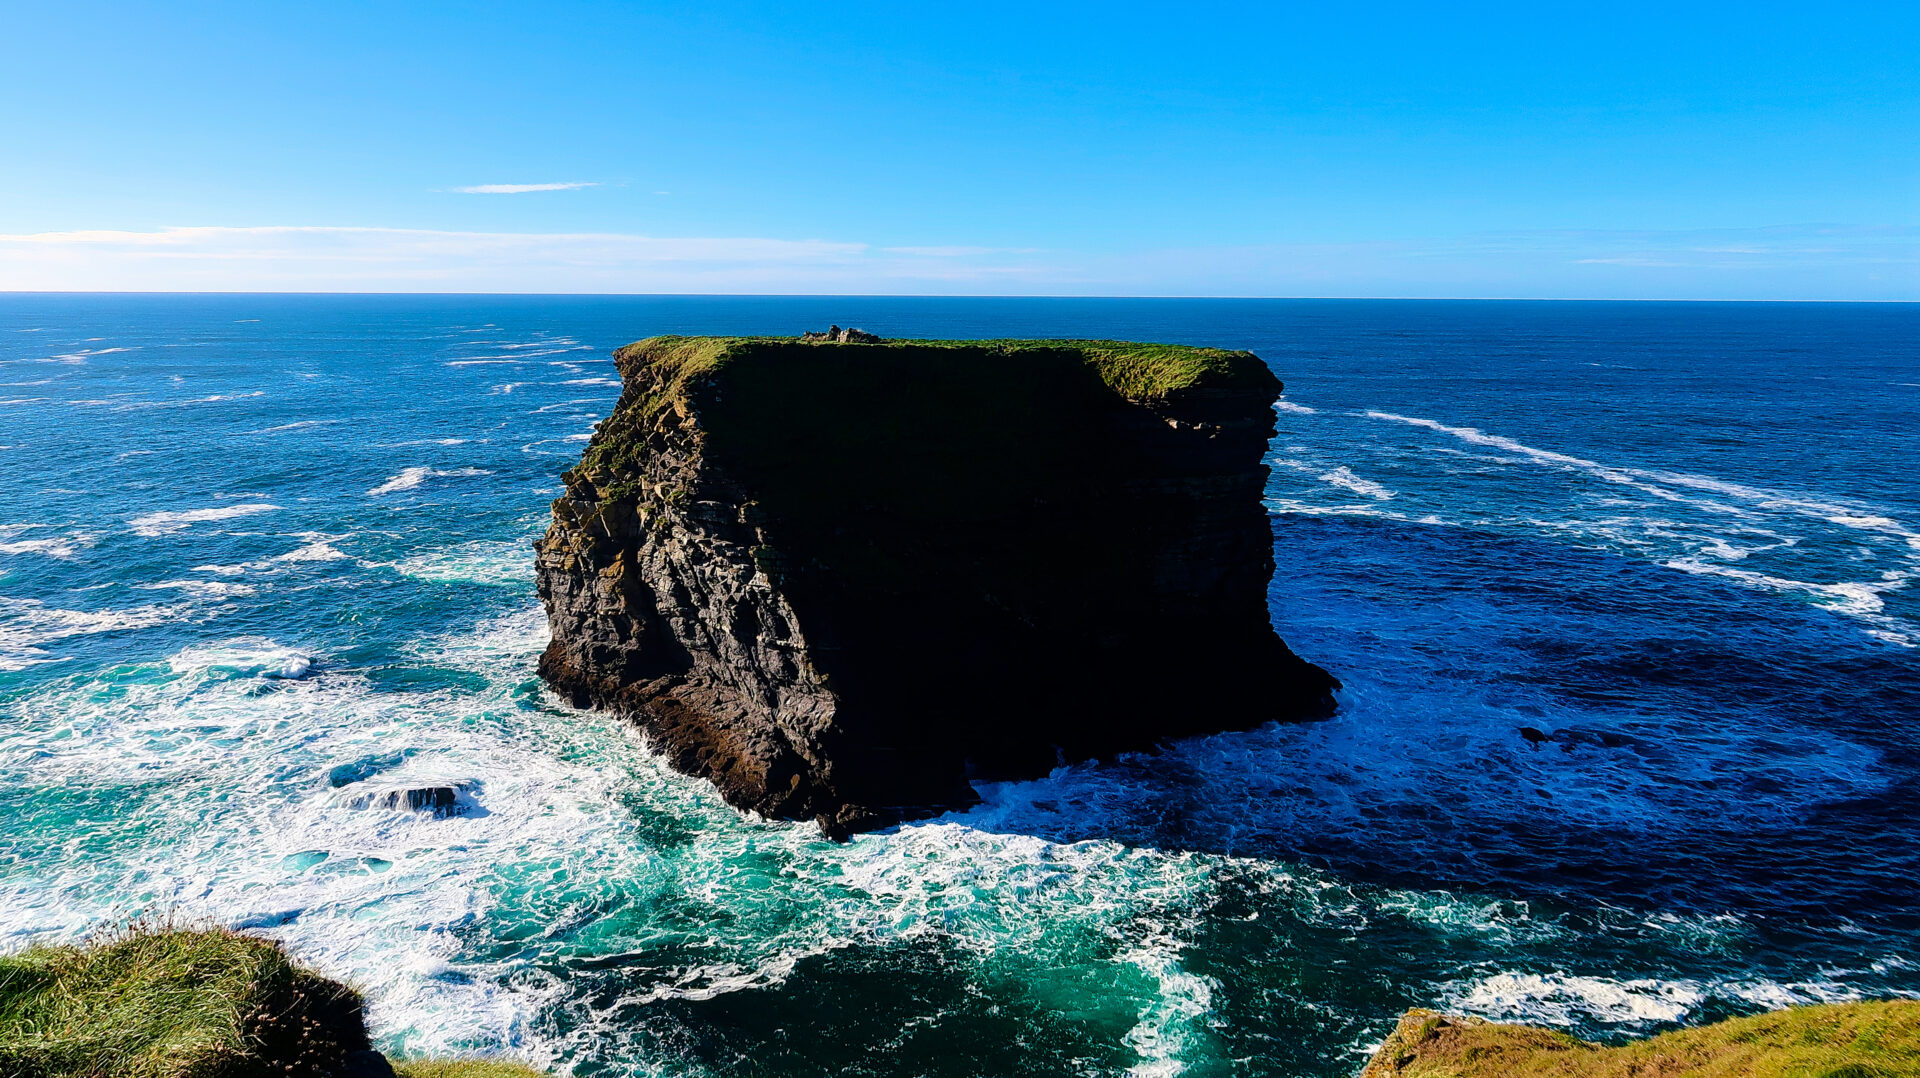 View from Kilkee Cliffs - Irlanda 2018